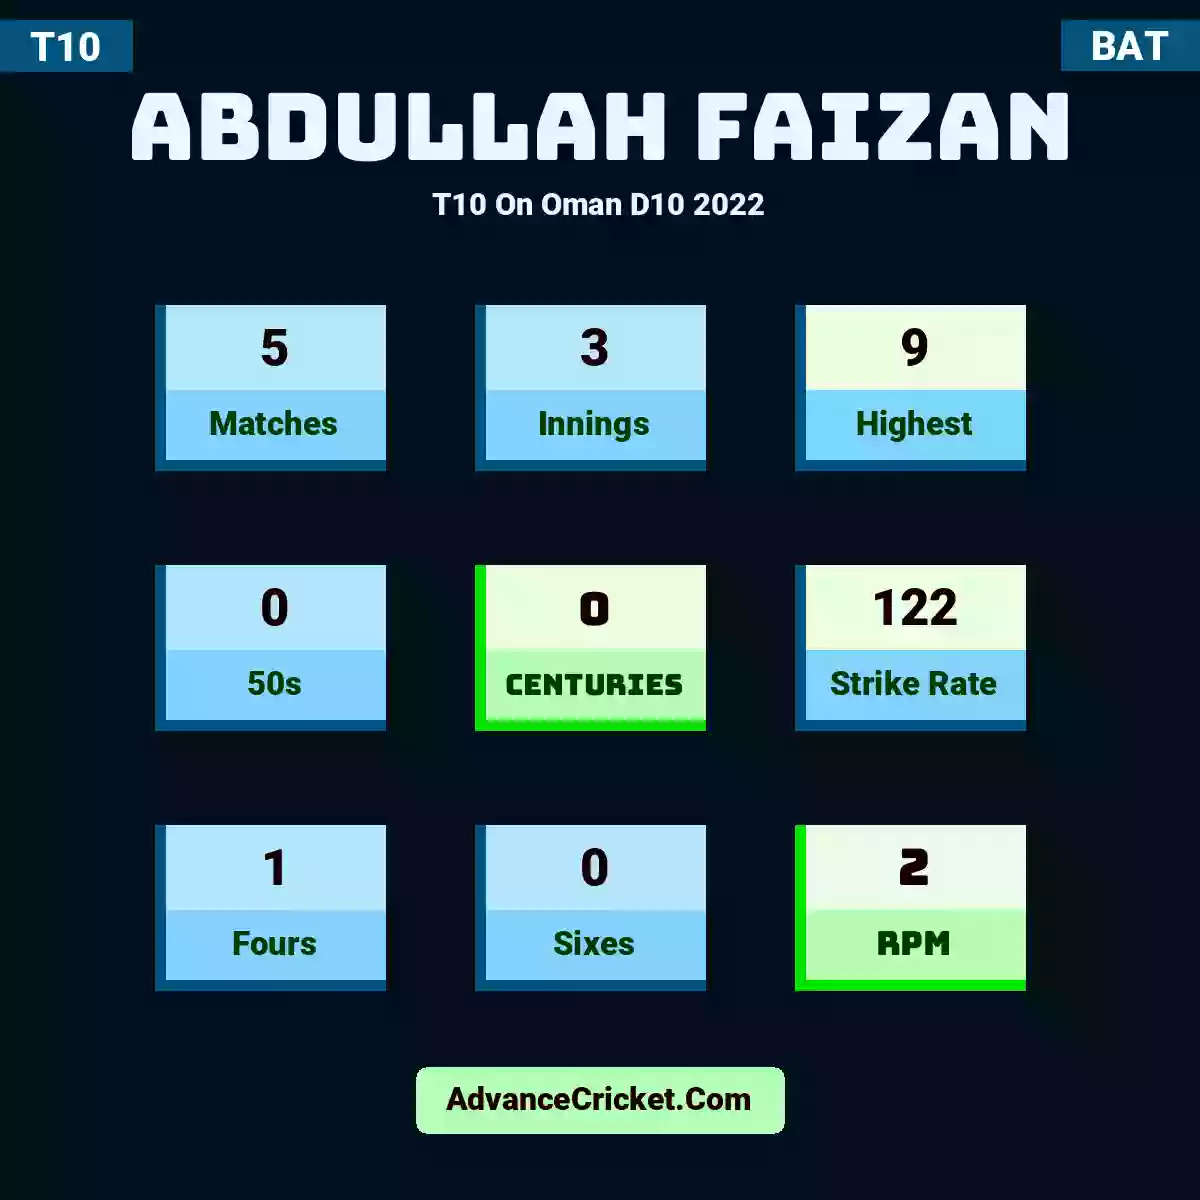 Abdullah Faizan T10  On Oman D10 2022, Abdullah Faizan played 5 matches, scored 9 runs as highest, 0 half-centuries, and 0 centuries, with a strike rate of 122. A.Faizan hit 1 fours and 0 sixes, with an RPM of 2.